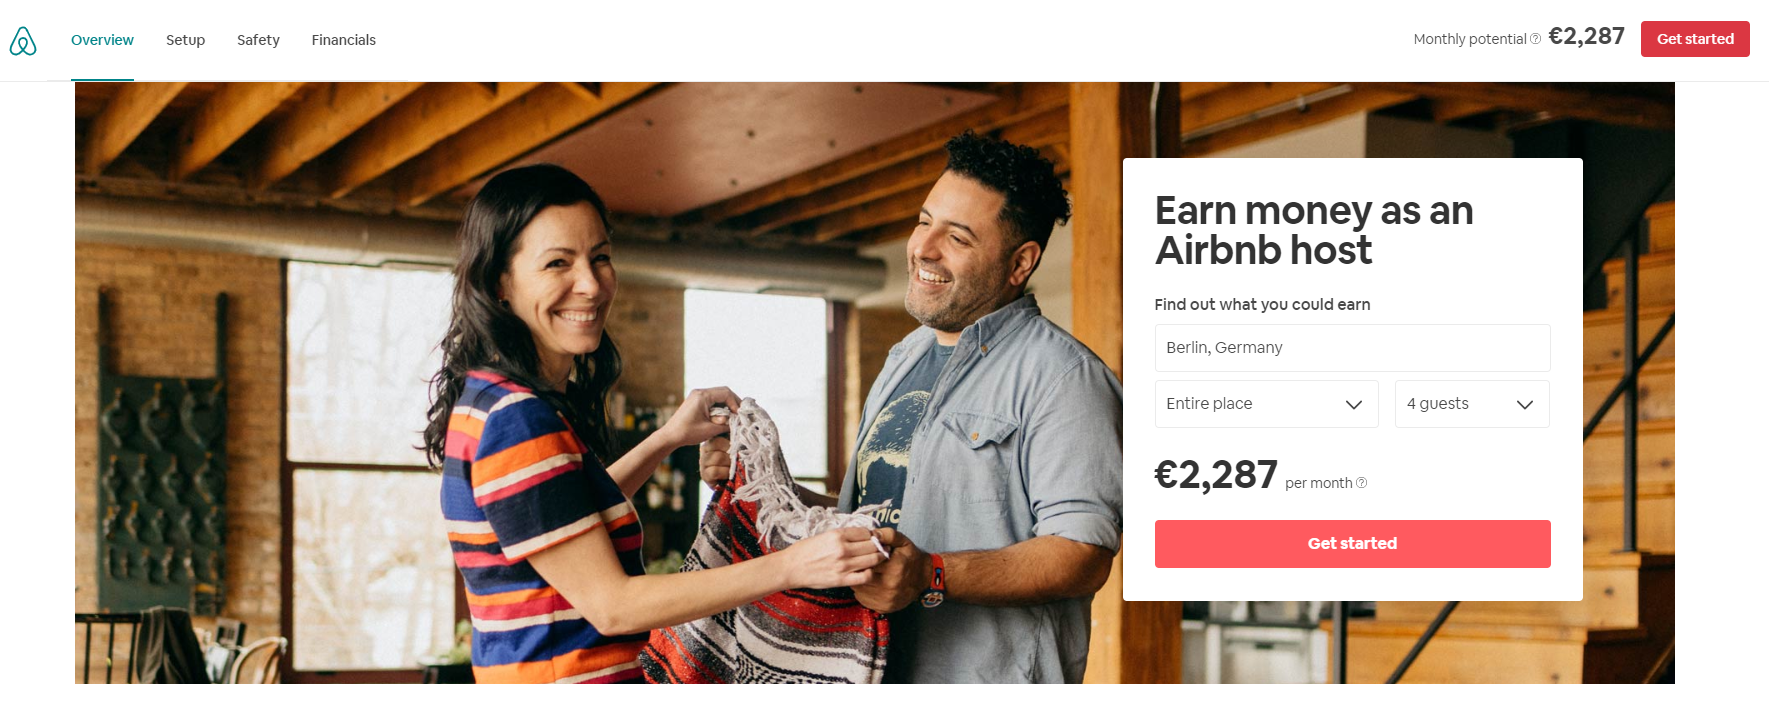 AirBnB Einnahmen Potenzial